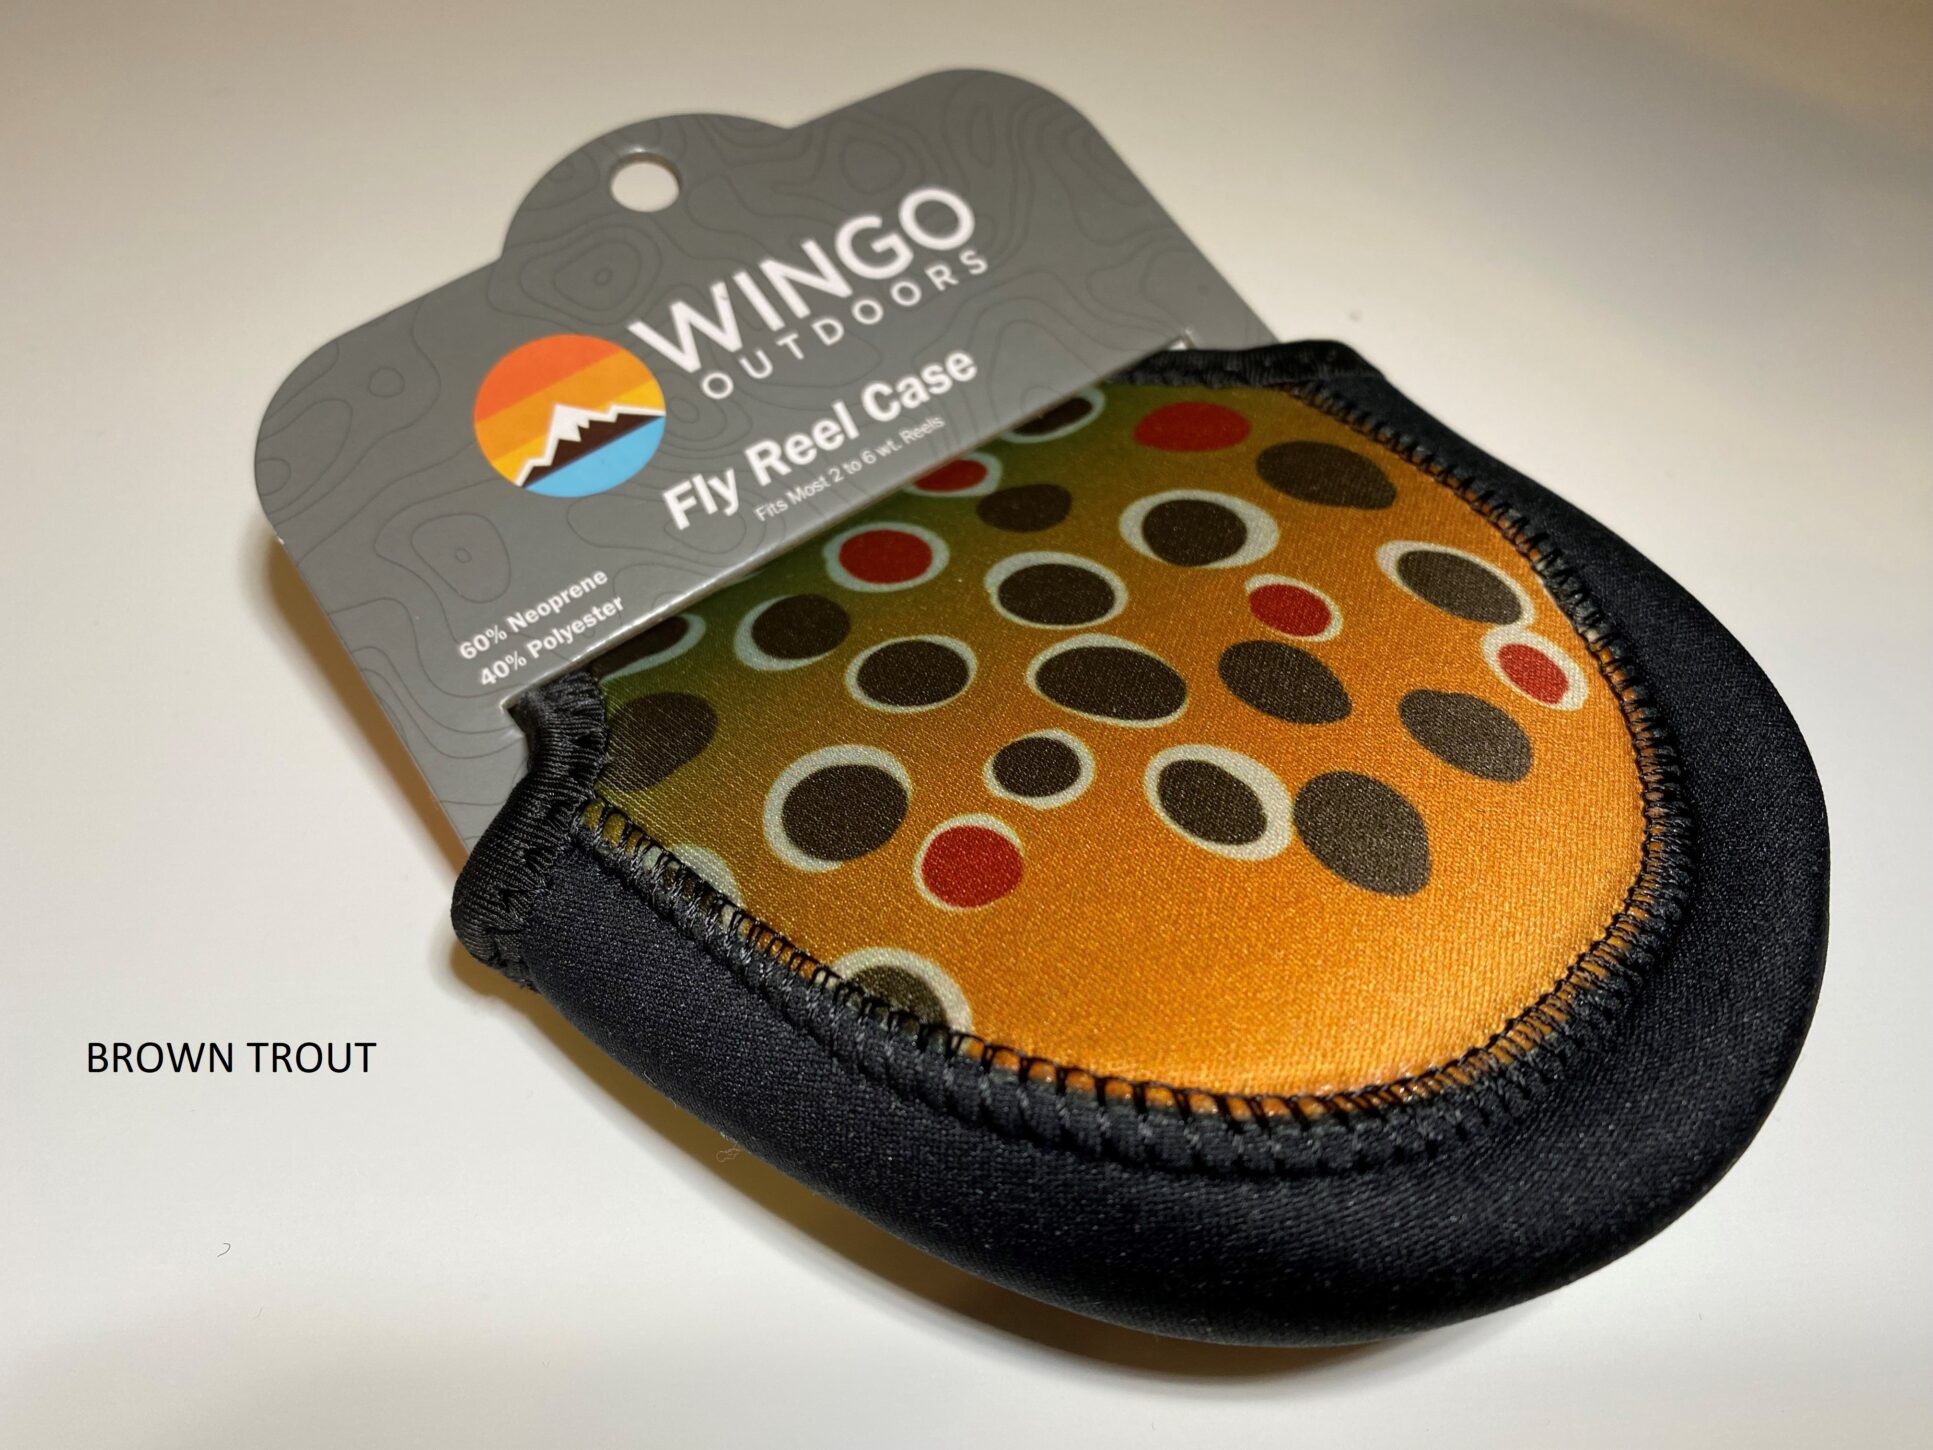 Wingo Outdoors Fly Reel Case, Grand Teton, Large